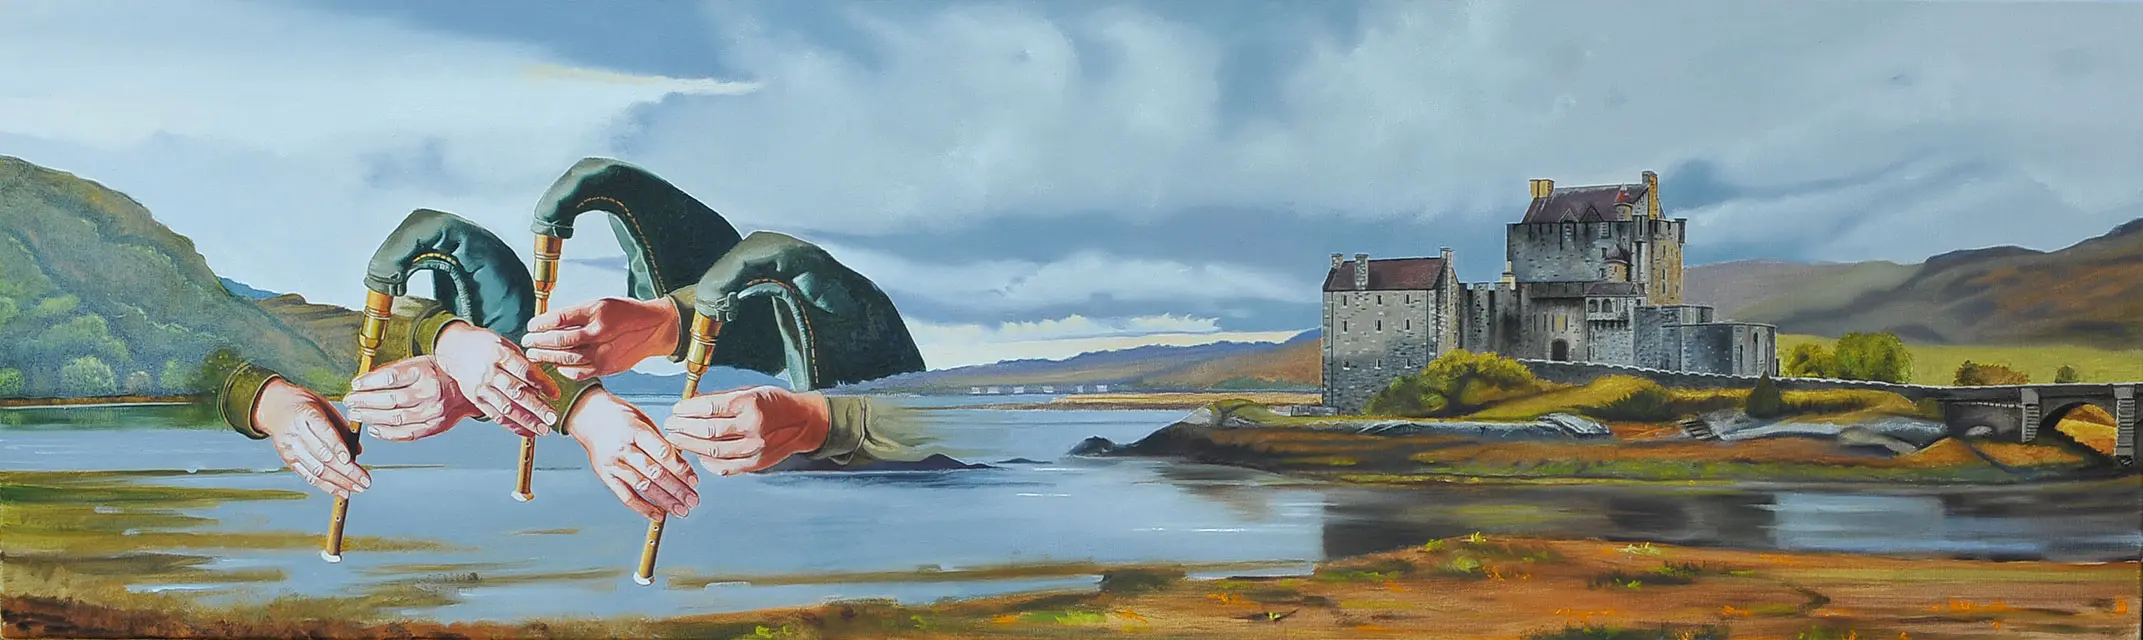 'Scottish smallpipe painting' (Eilean Donan Castle) 60 x 200 cm, Öl auf Leinwand (2015/16)